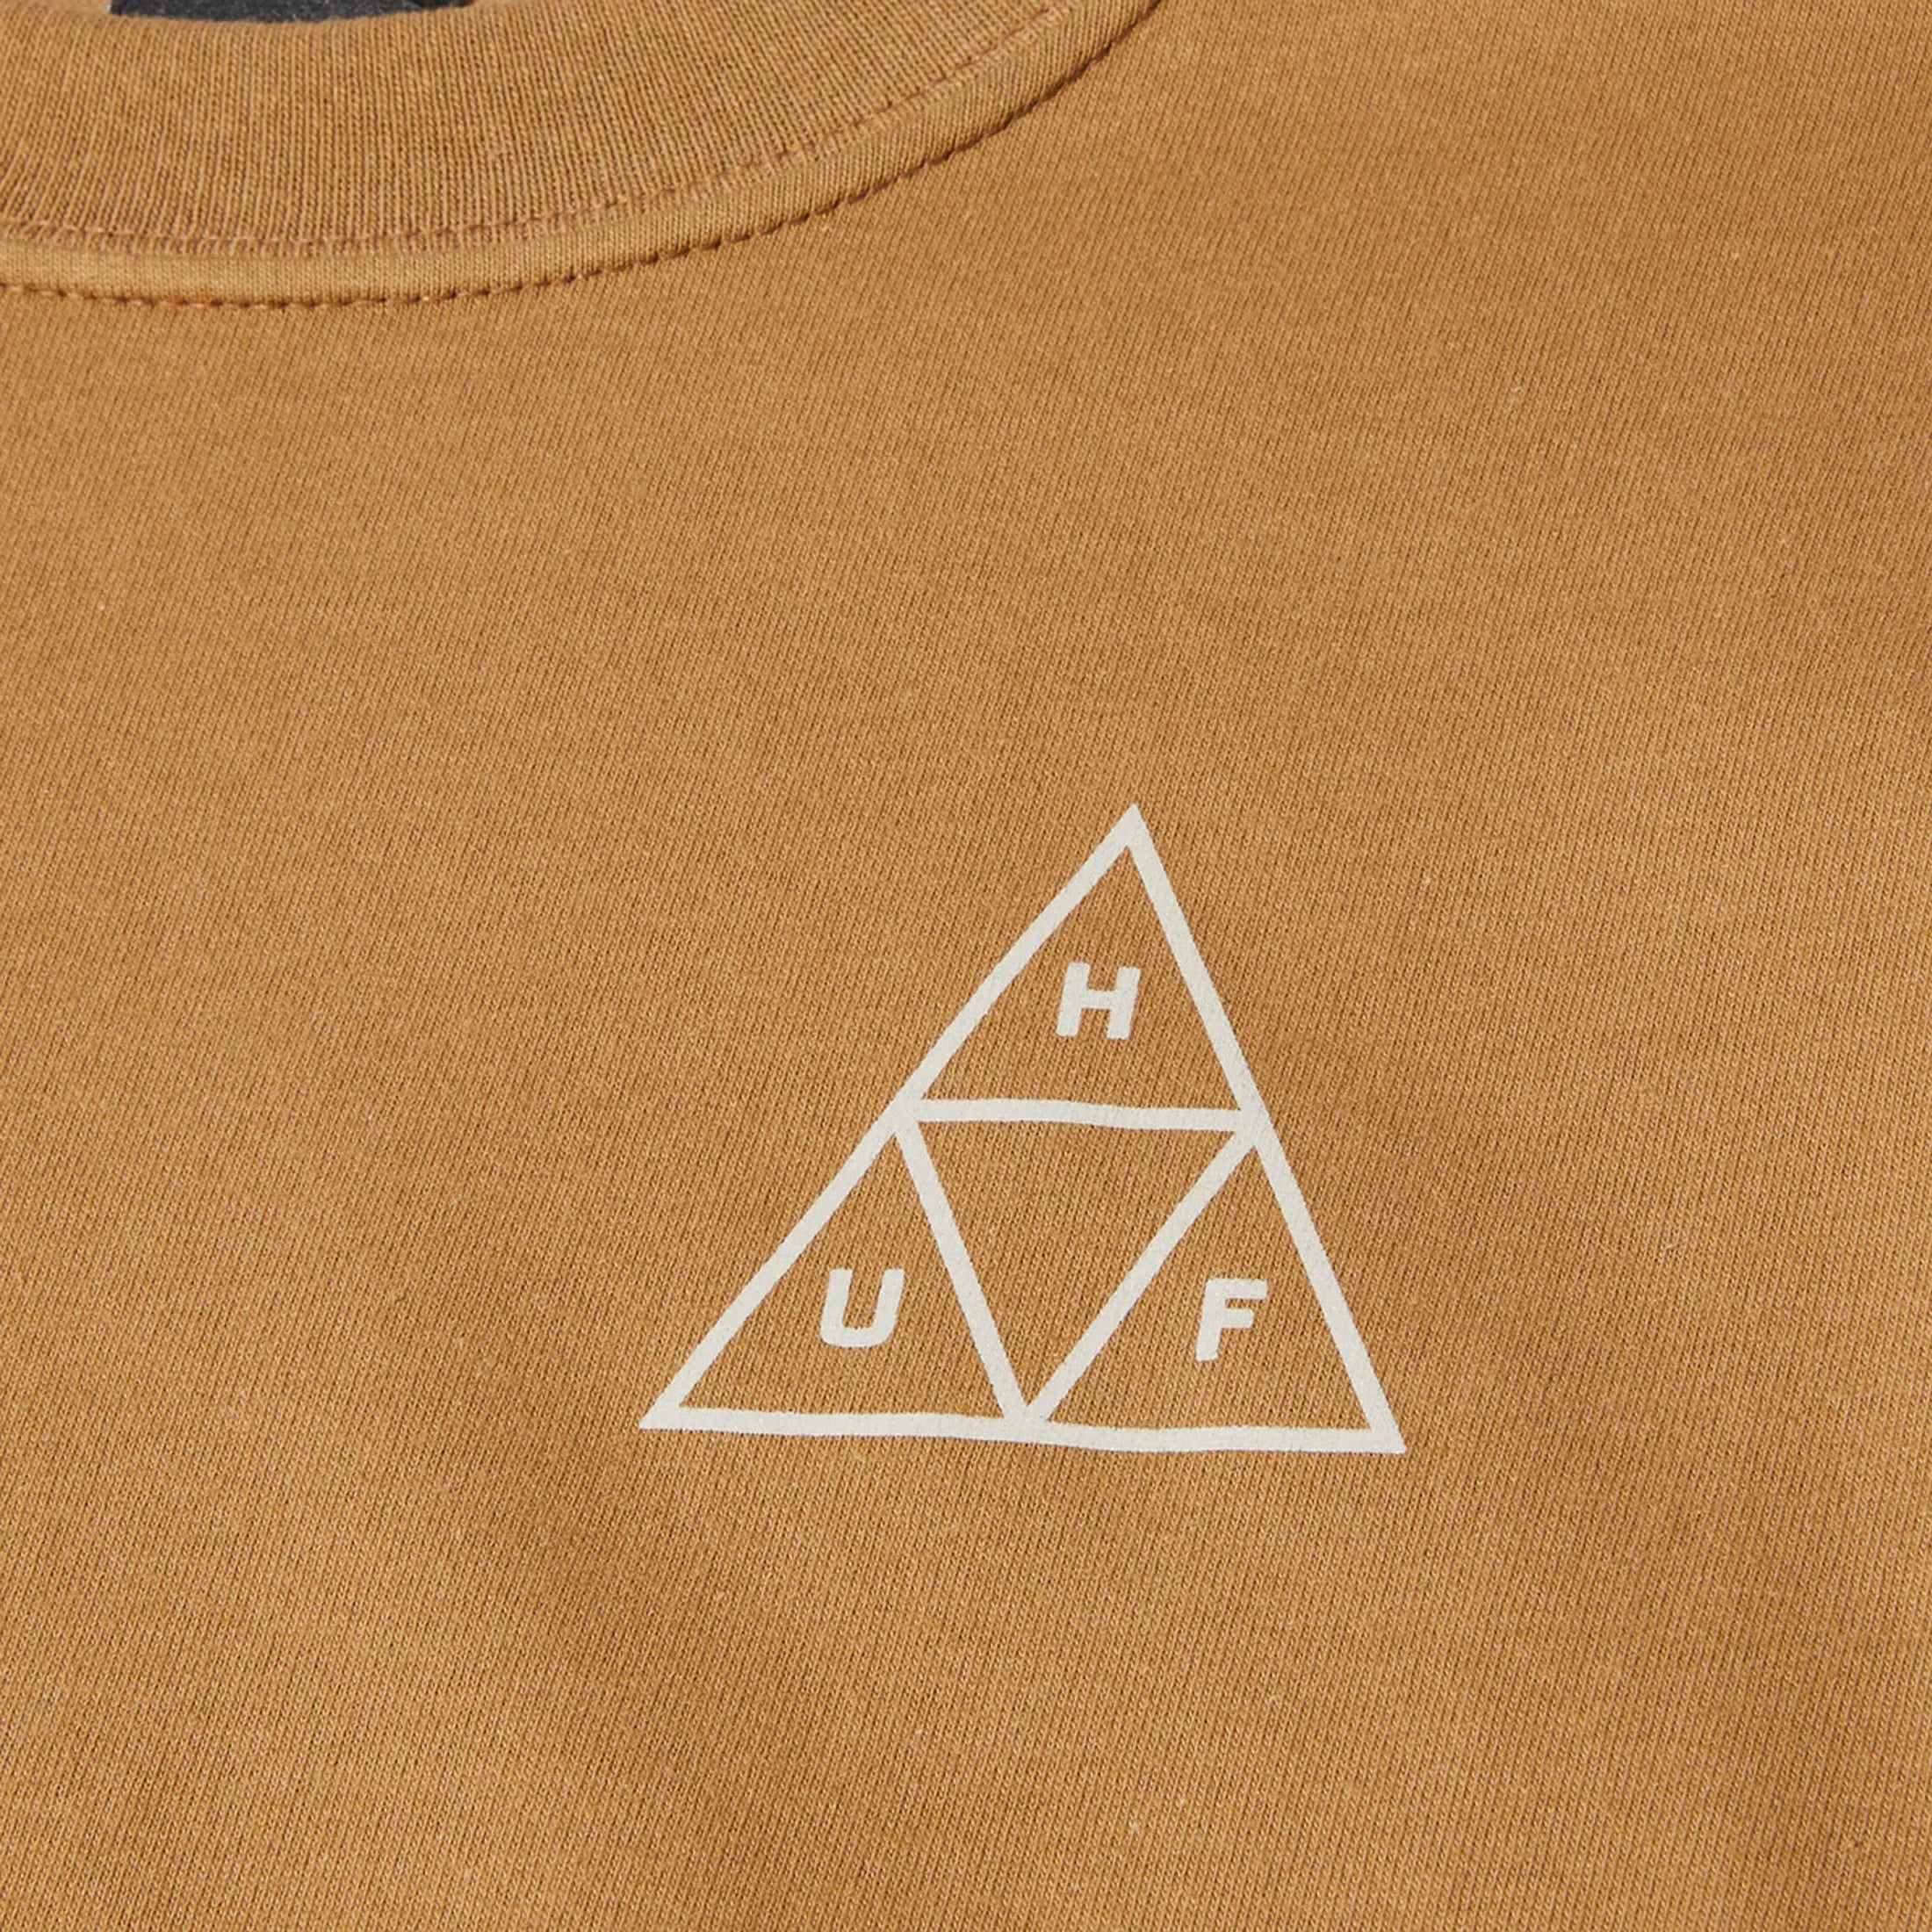 Huf Set Triple Triangle T-Shirt Camel